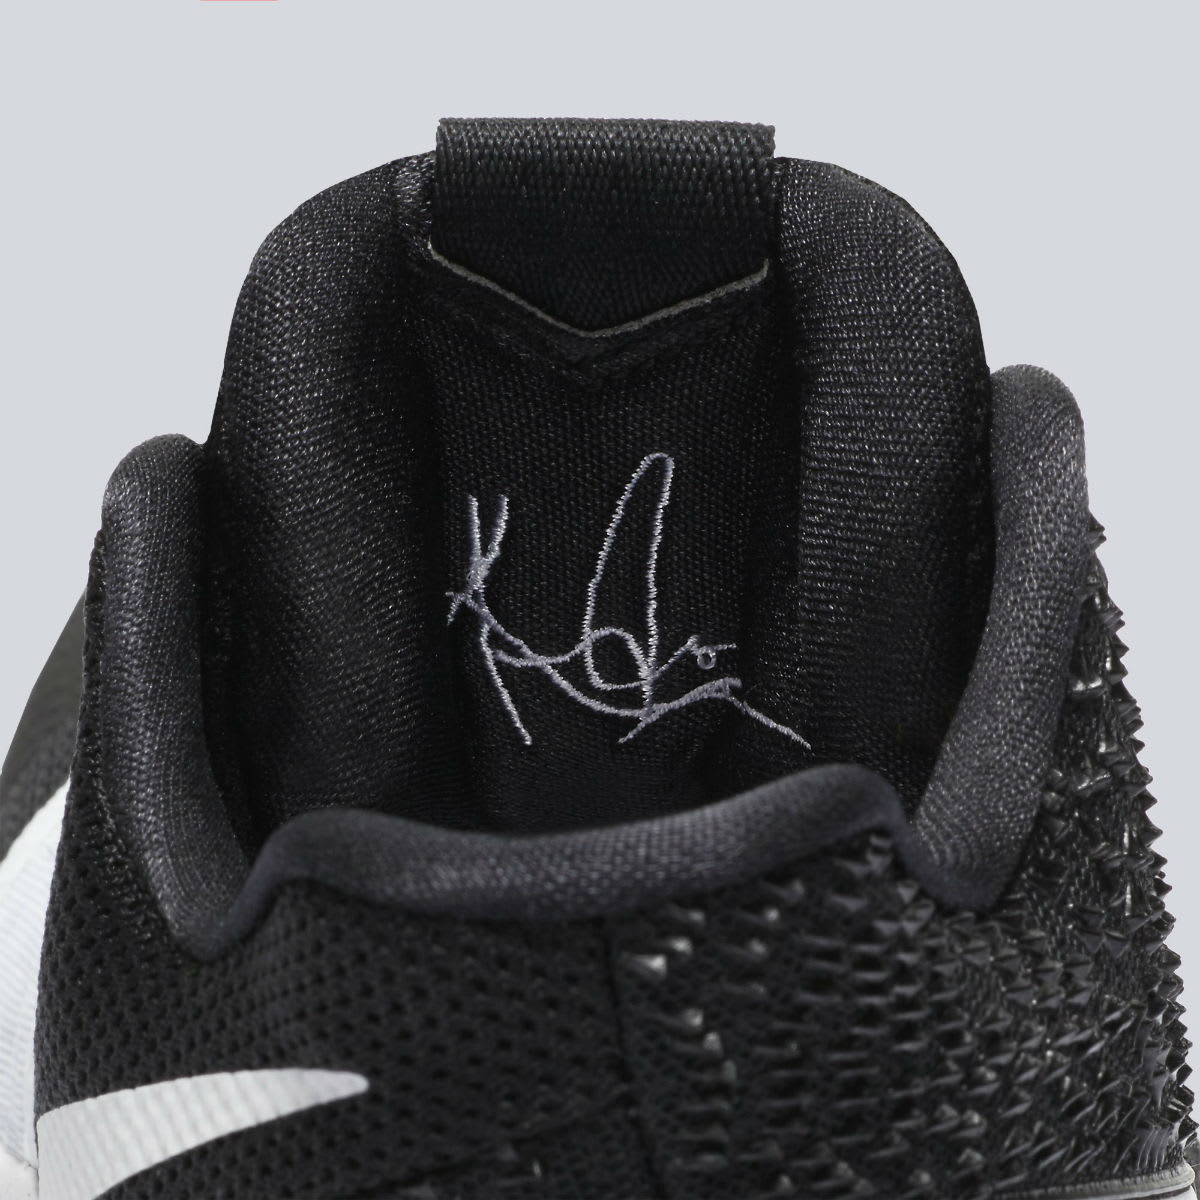 Nike Kyrie 3 Black White Tuxedo Release Date Tongue 917724-001